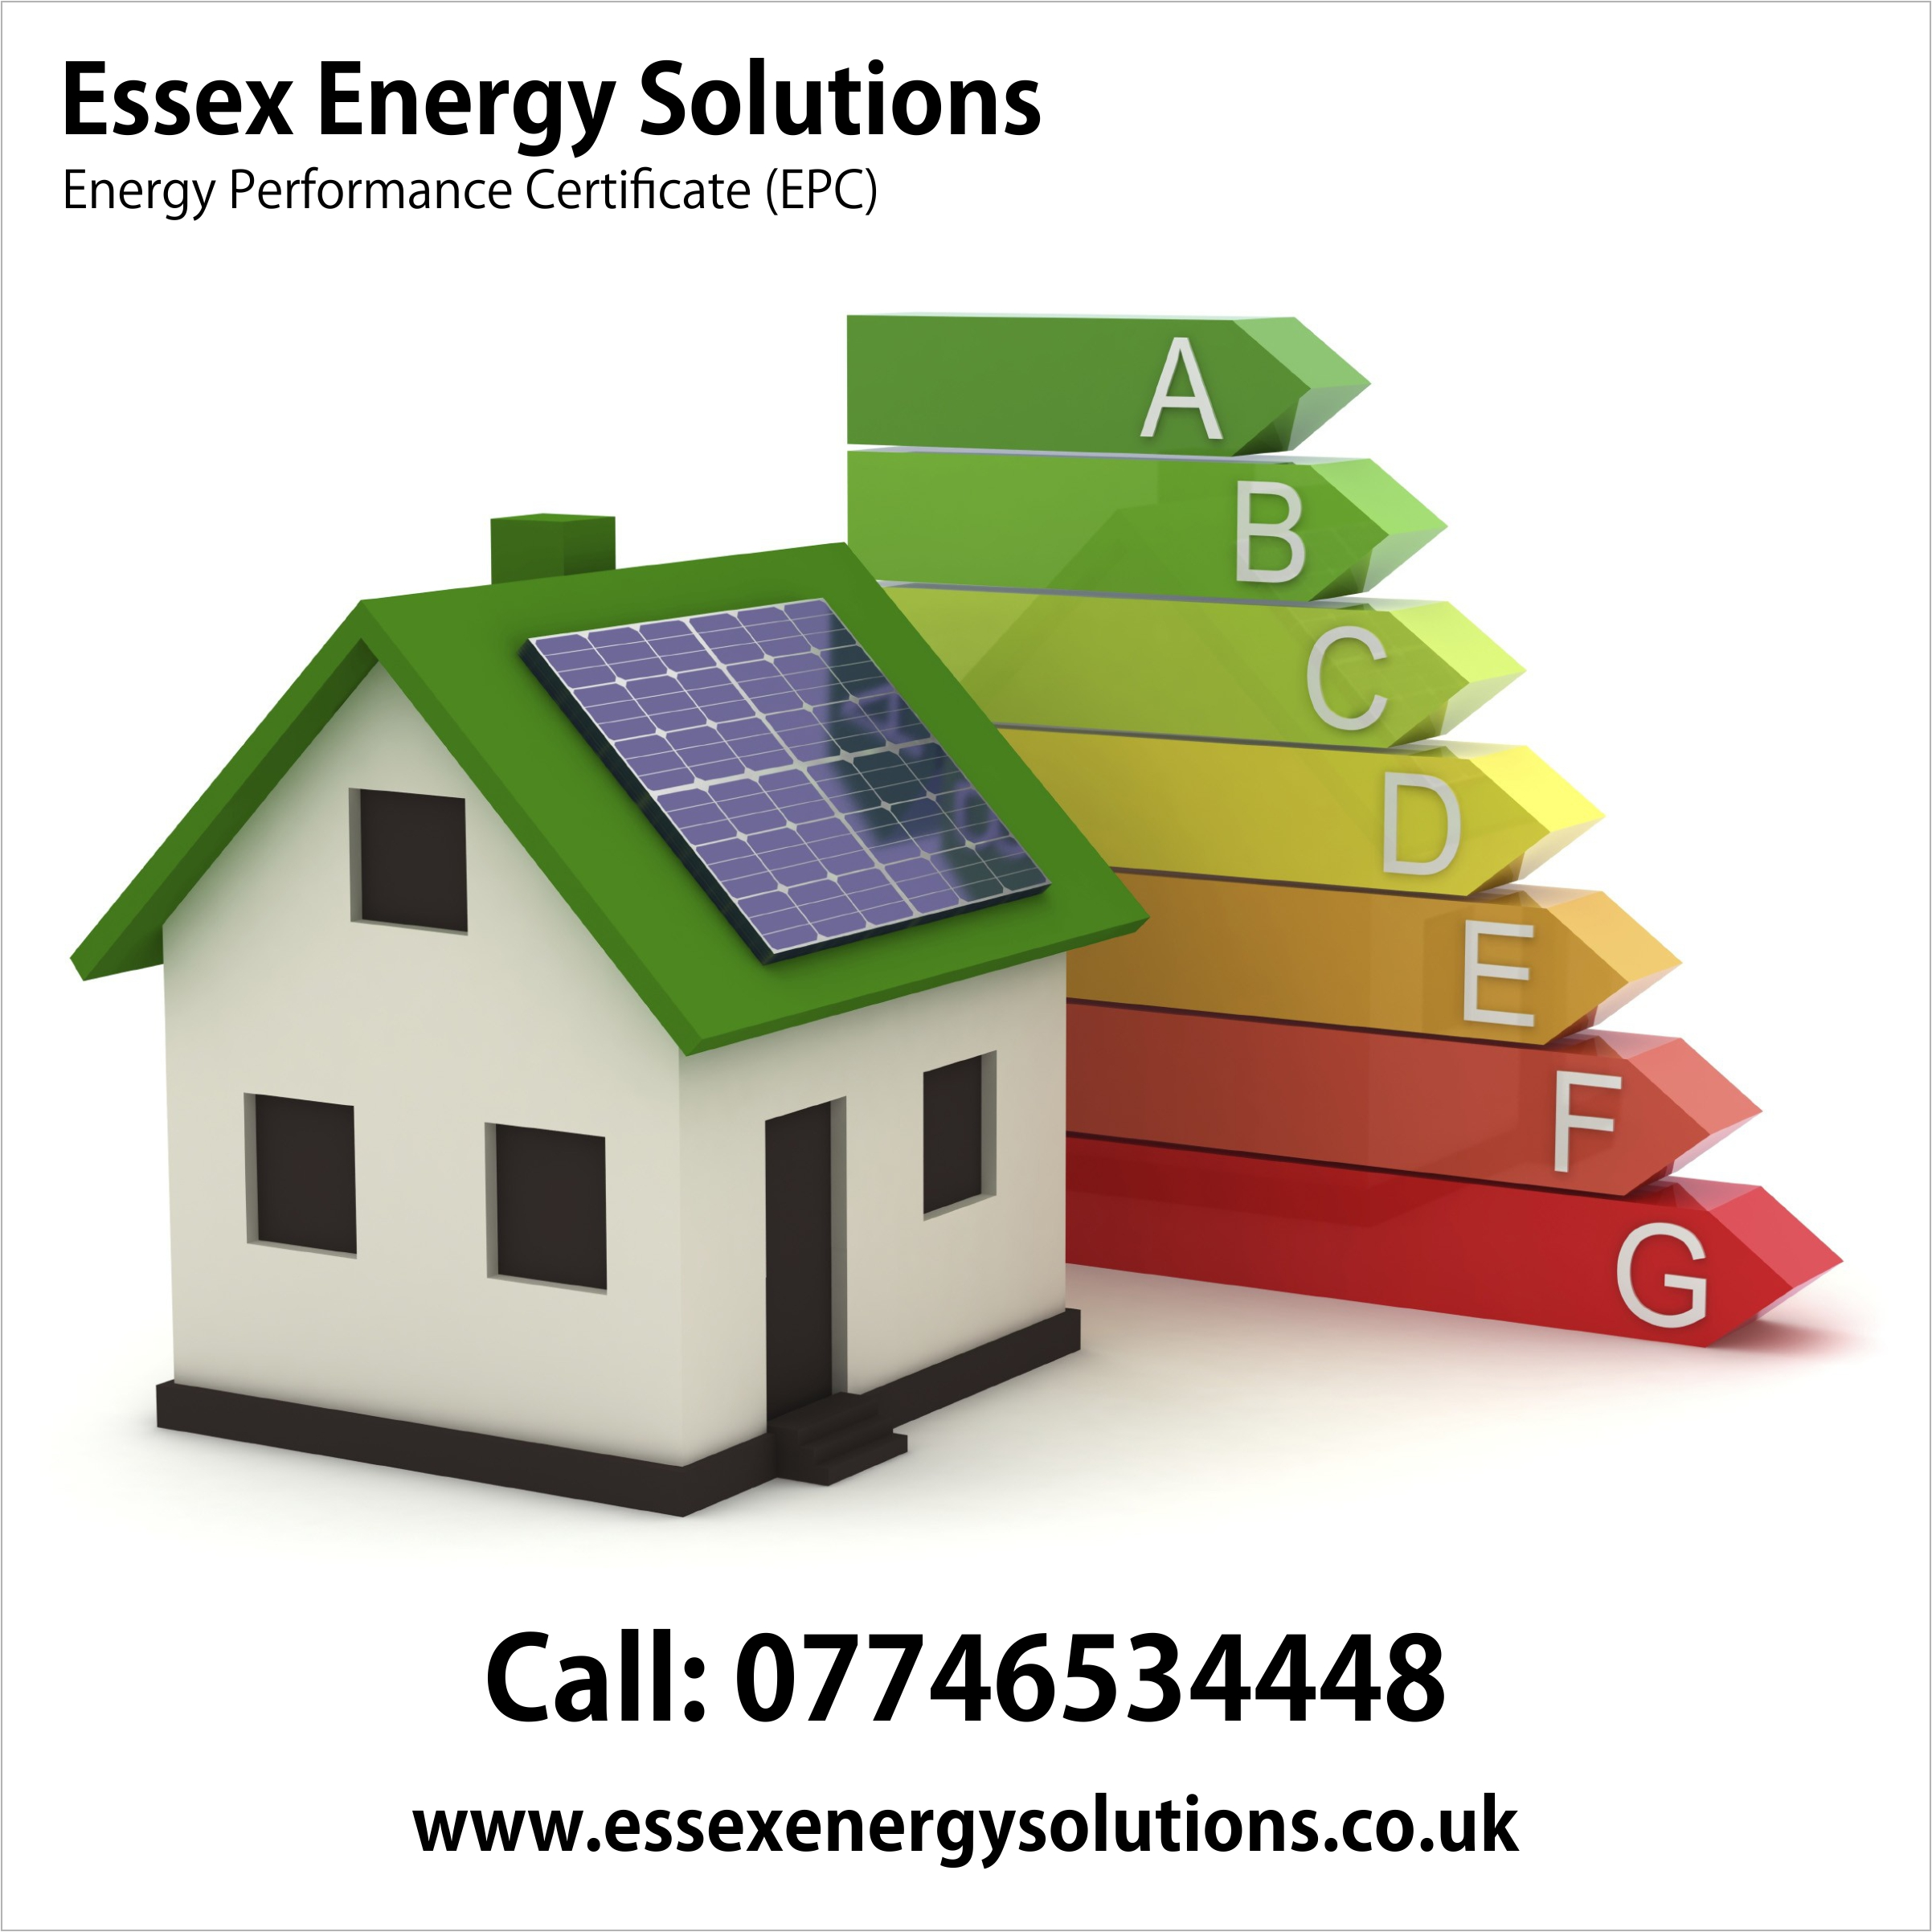 Essex Energy Solutions